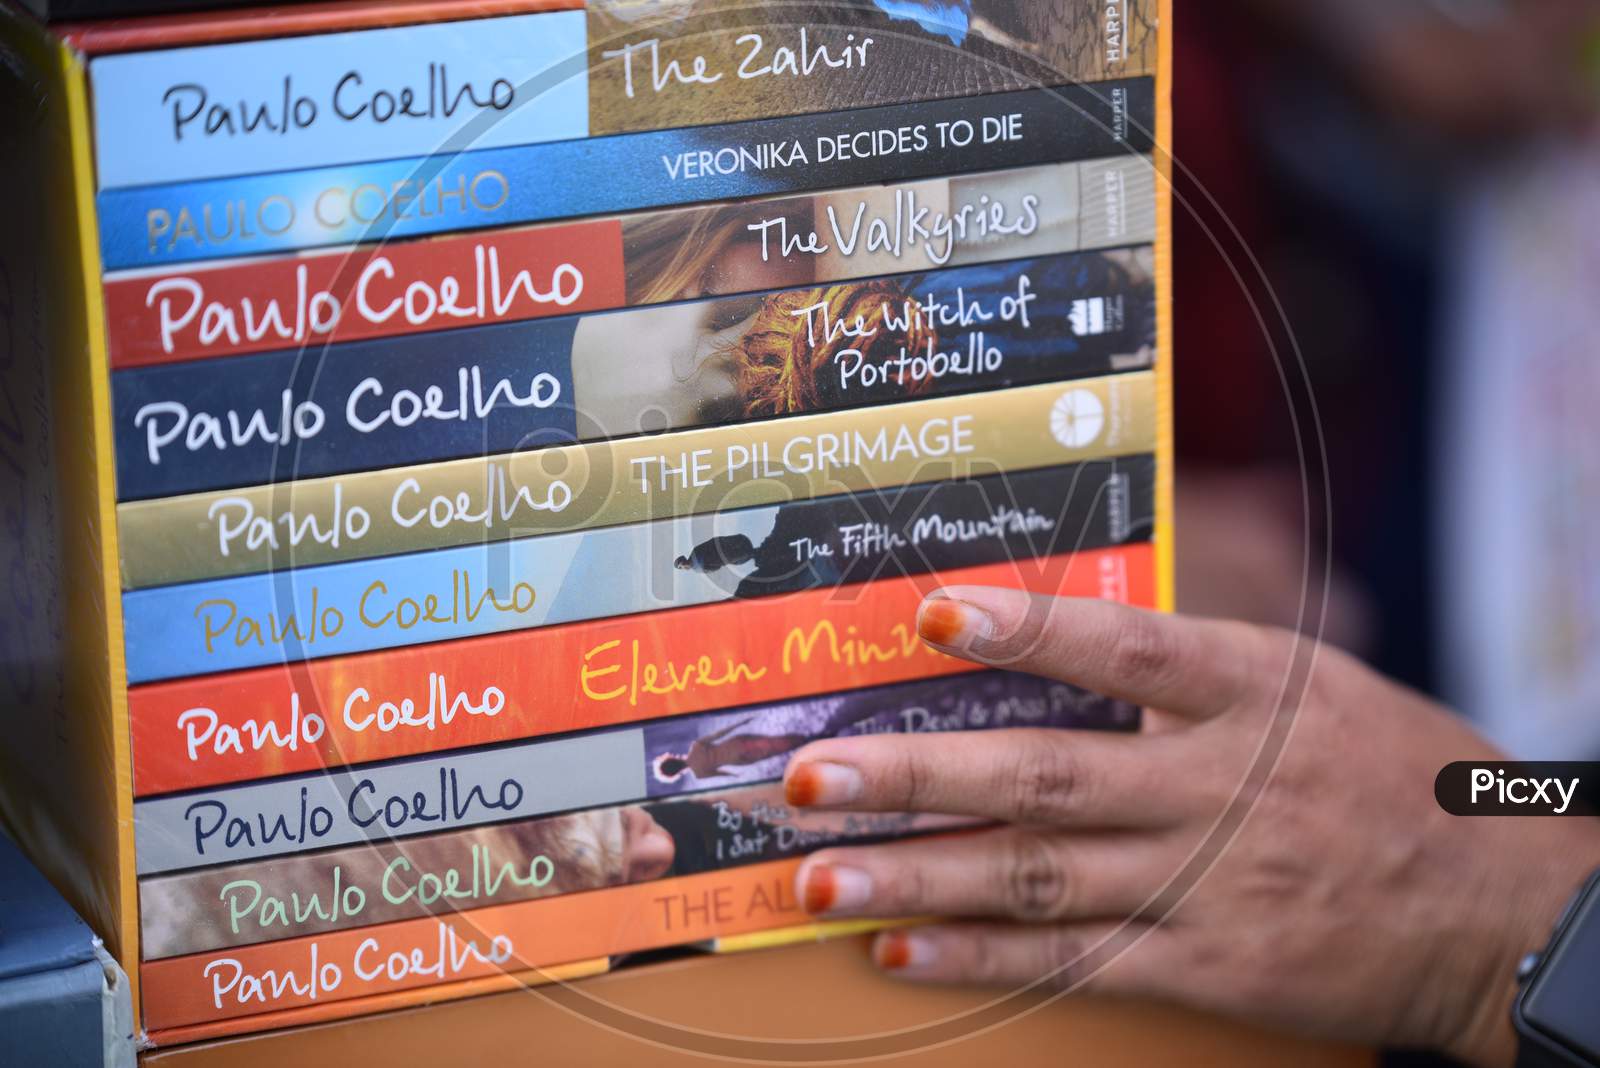 Paulo Coelho Novel Collection